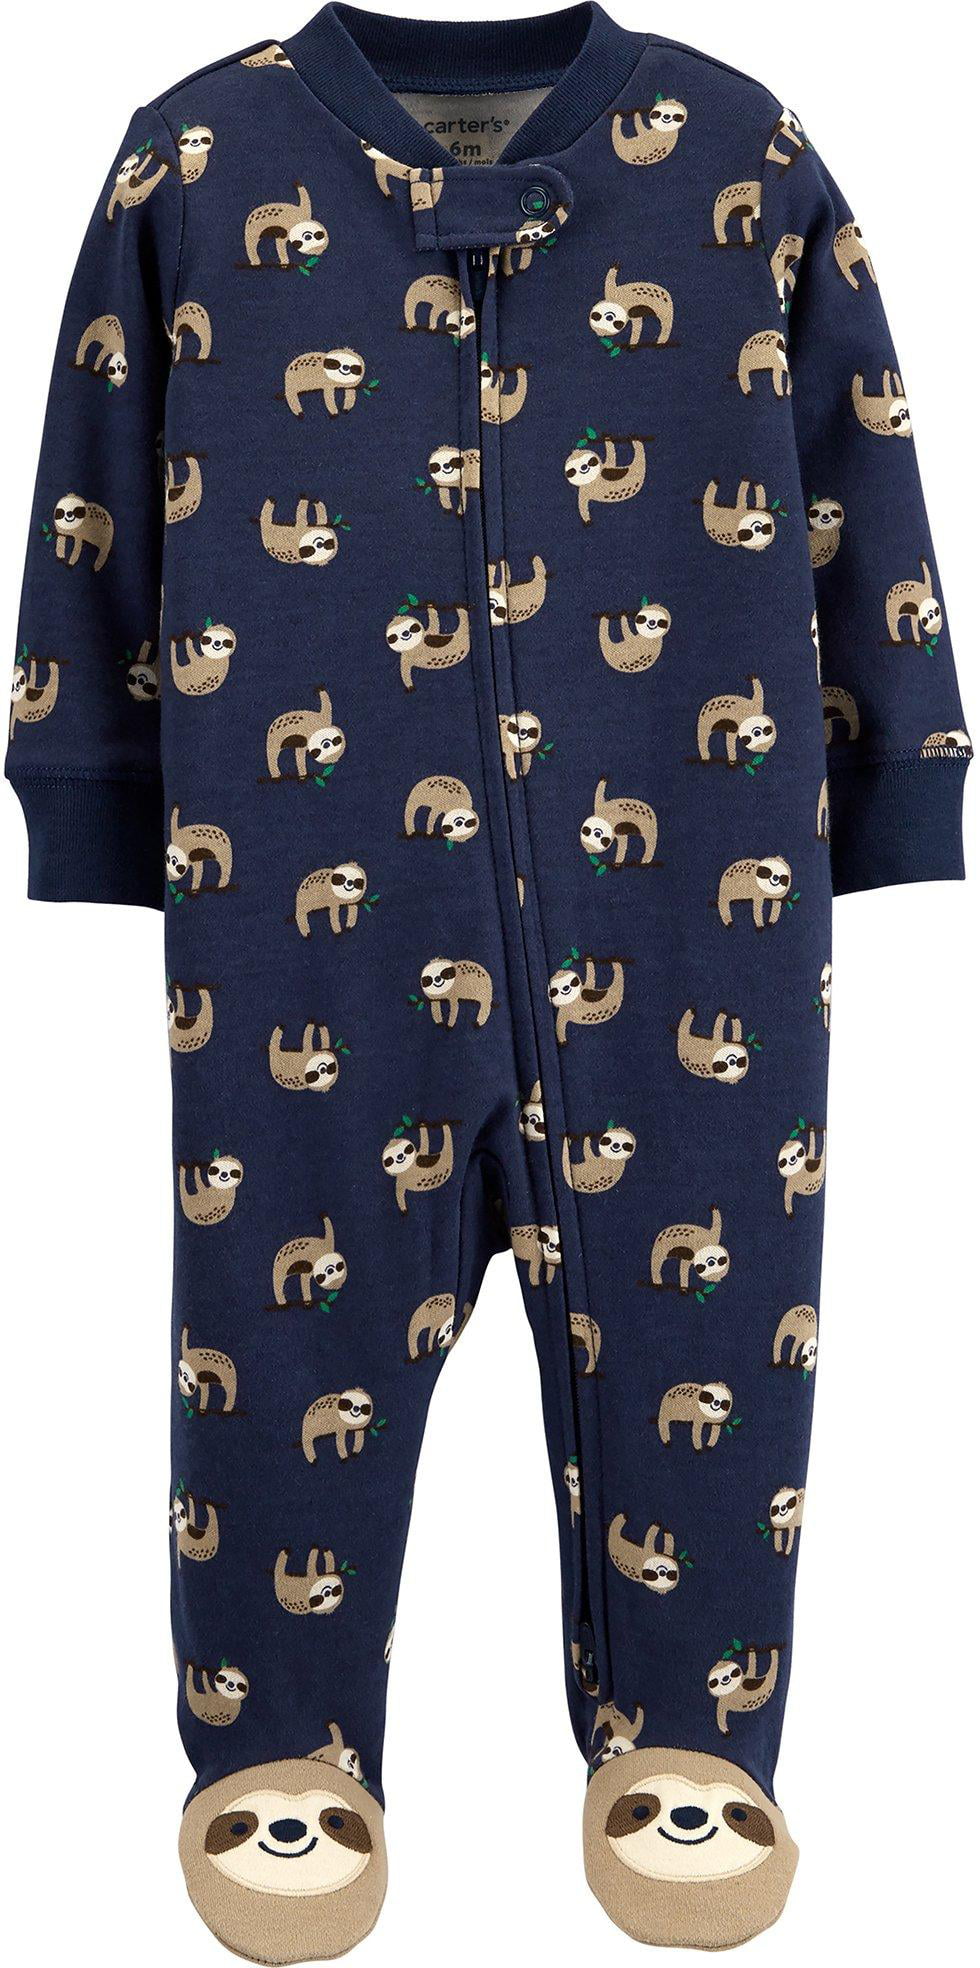 Carter's Carters Baby Boys Sloth Print Snug Fit Footie Pajamas 3 Month Blue